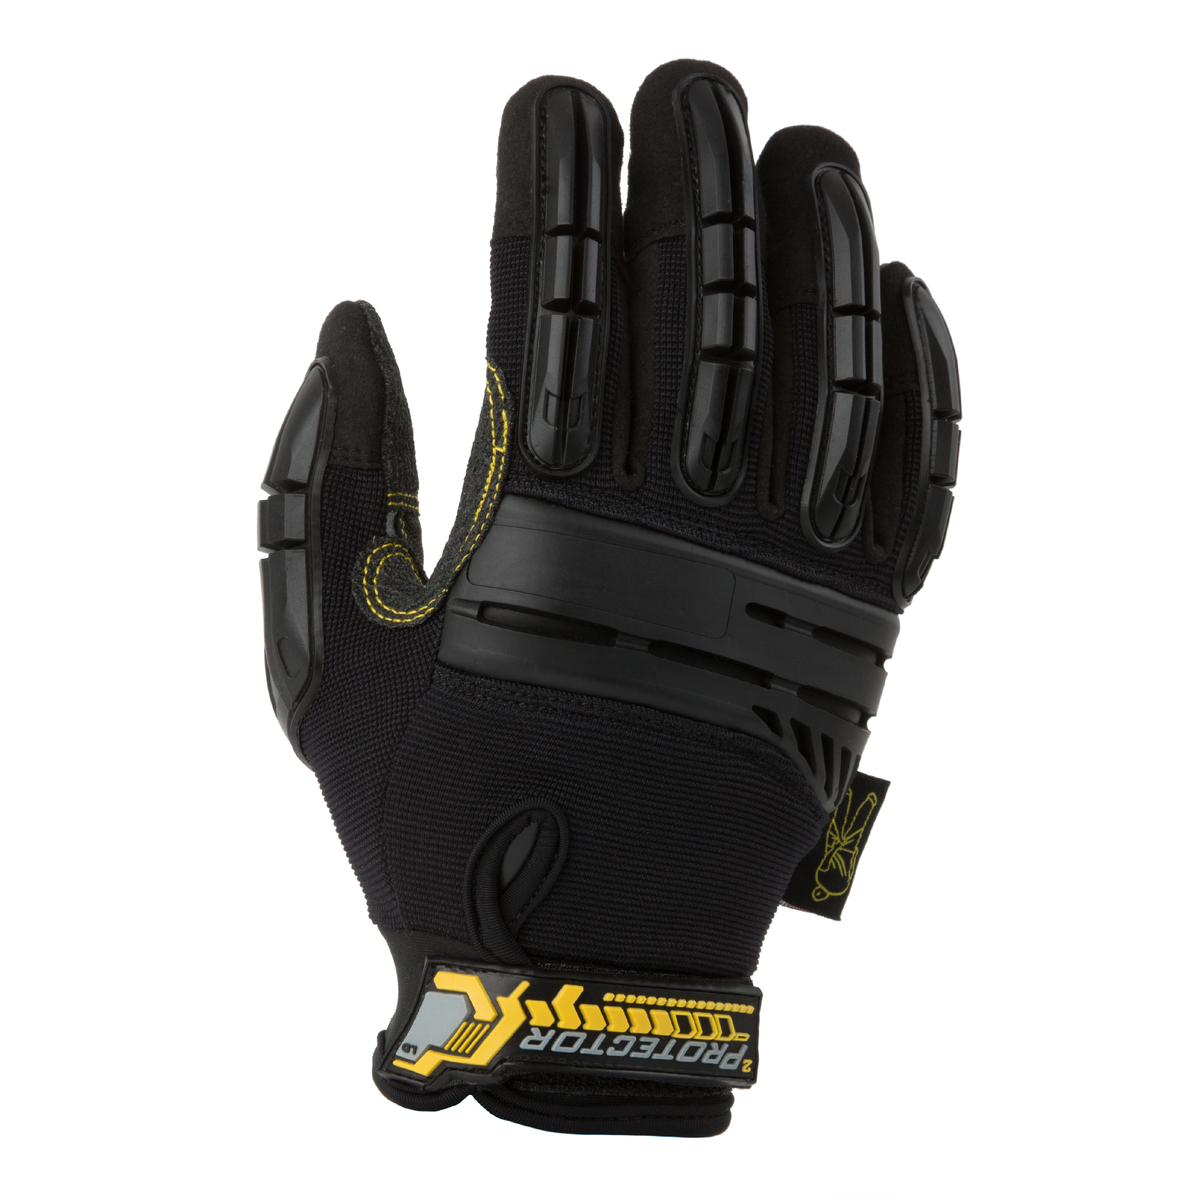 Dirty Rigger - Protector™ 3.0 Heavy Duty Full Finger Rigger Glove